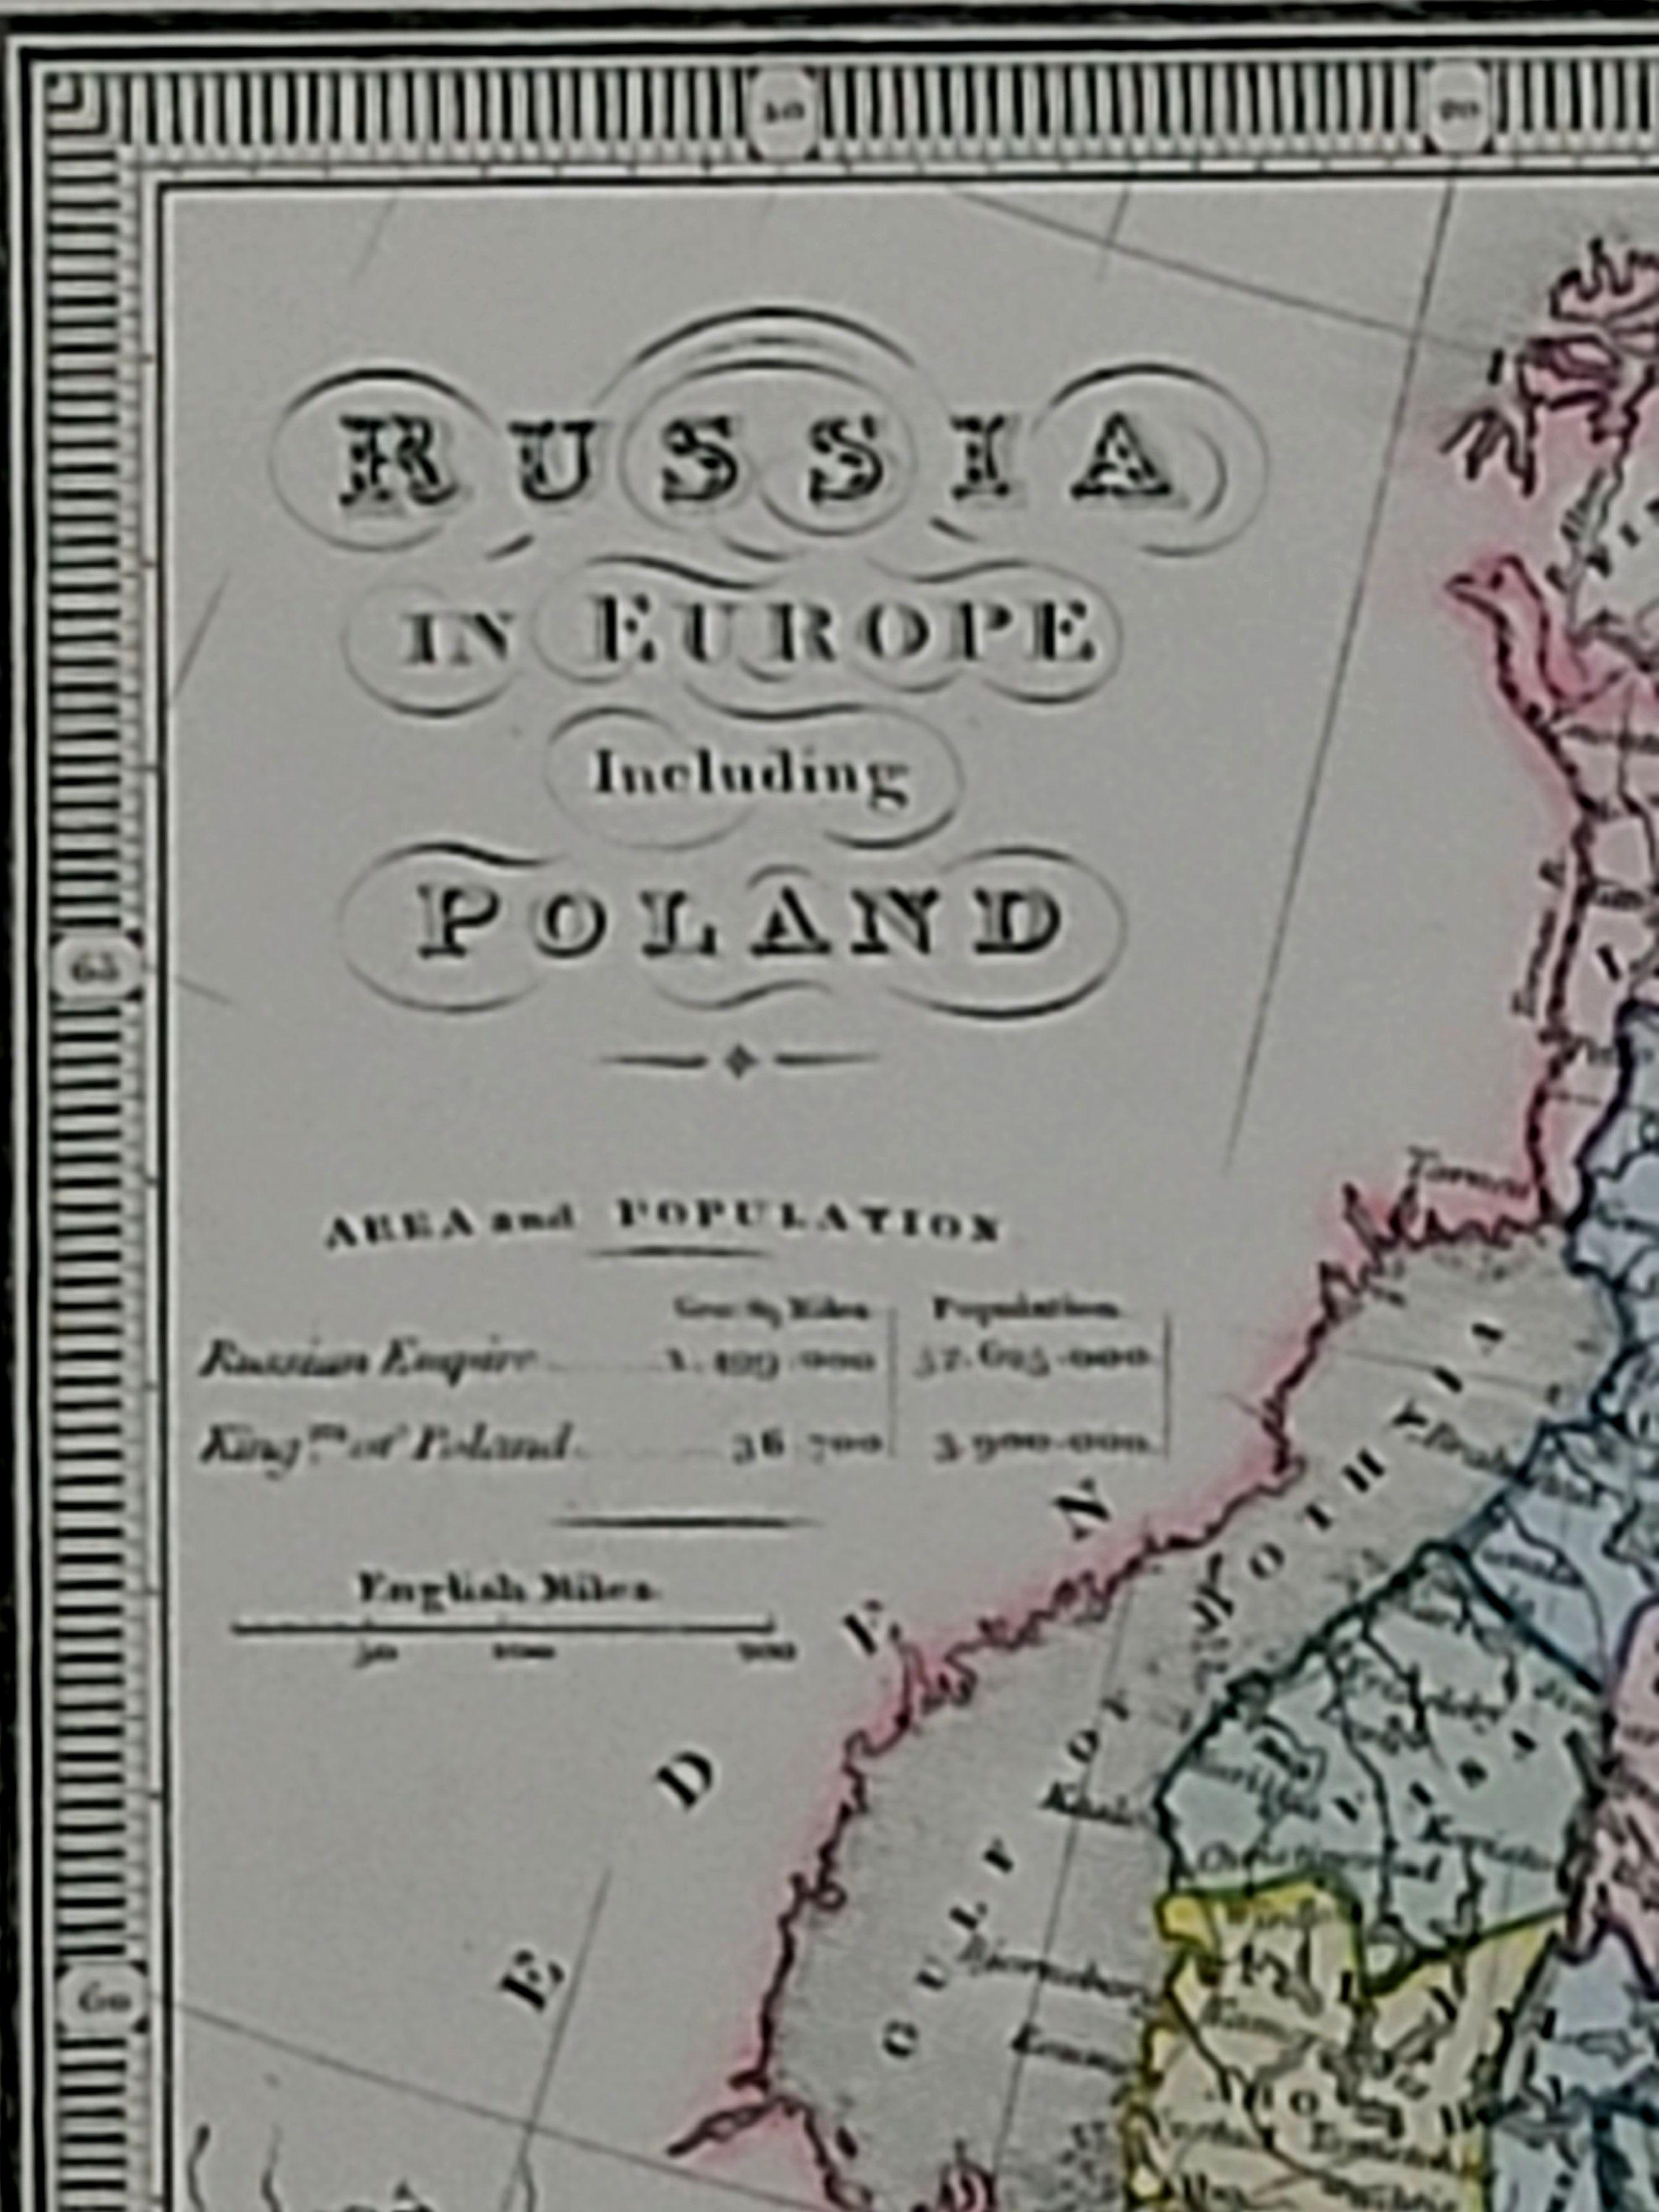 poland map europe